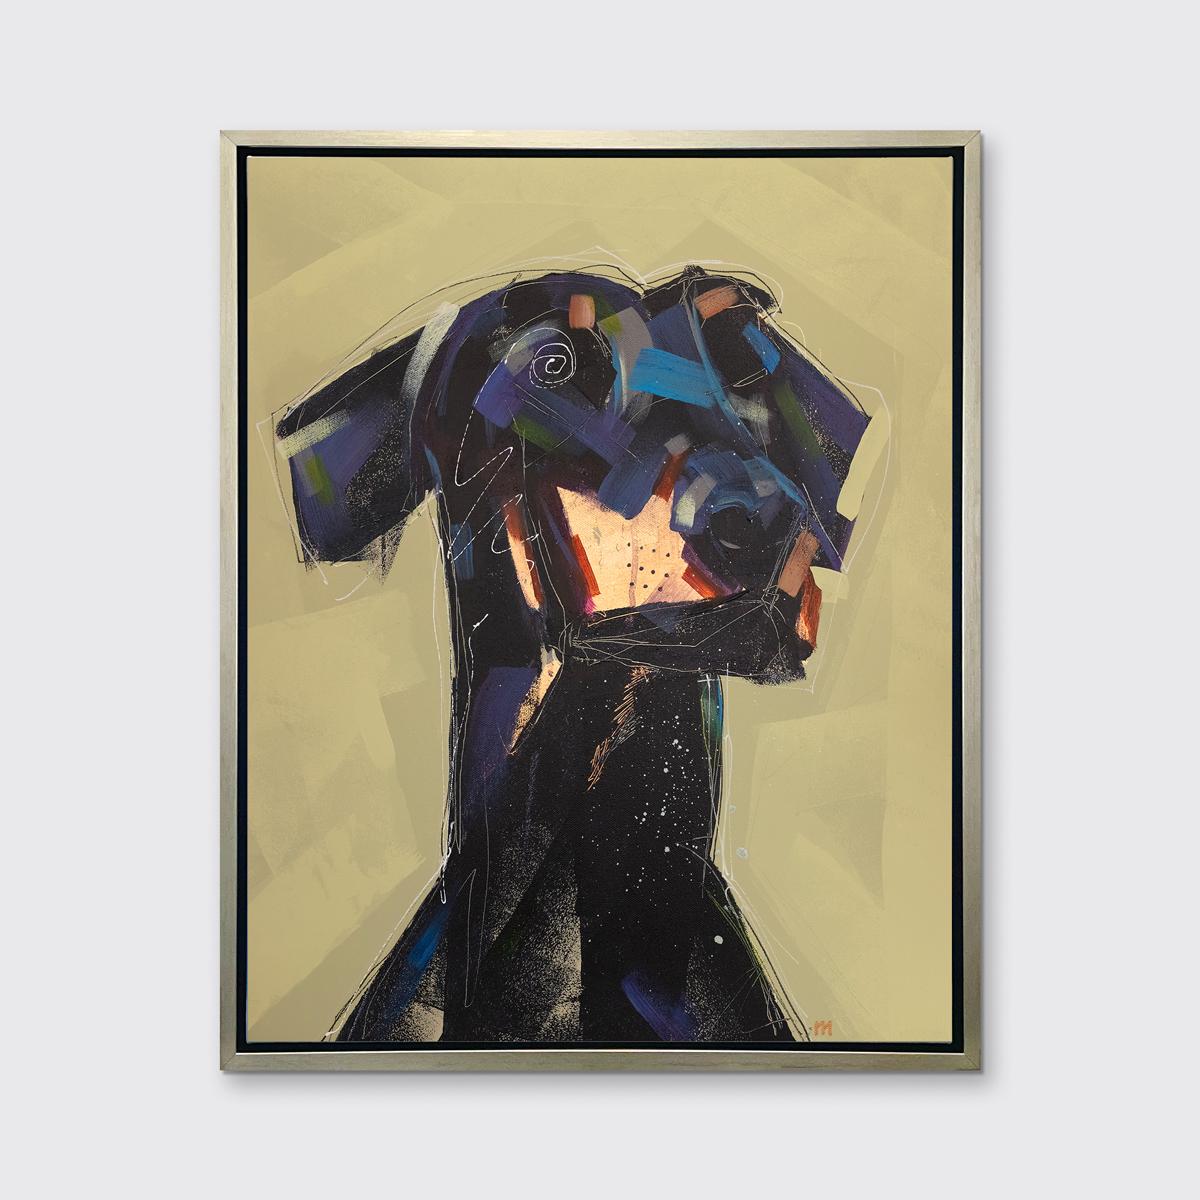 Animal Print Russell Miyaki - "Doberman" Giclée en édition limitée, 50" x 40".